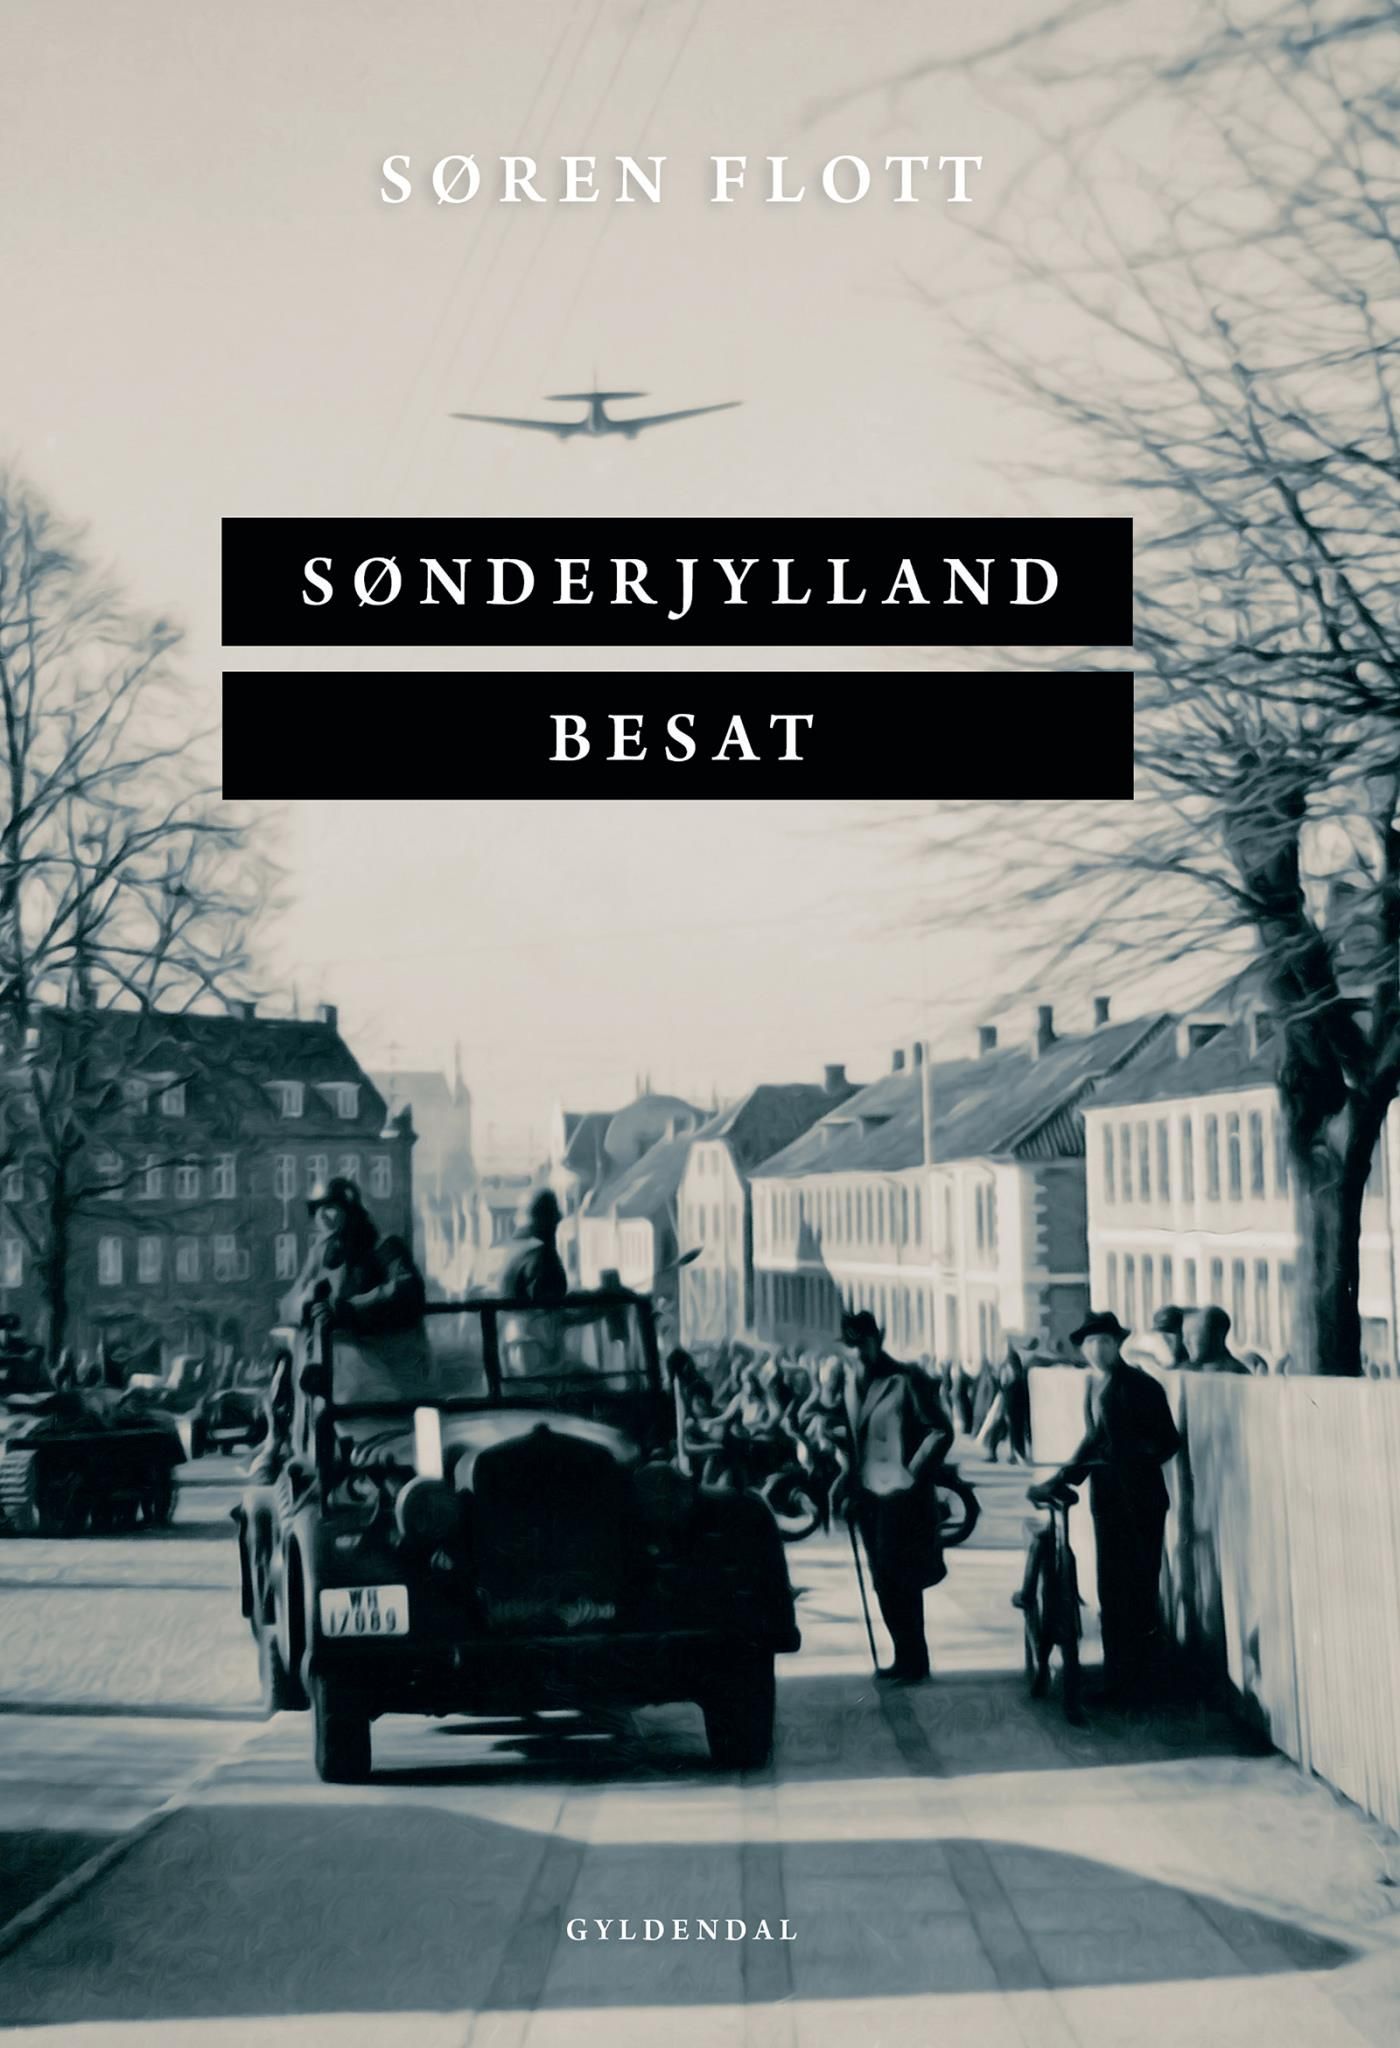 Sønderjylland besat, eBook by Søren Flott